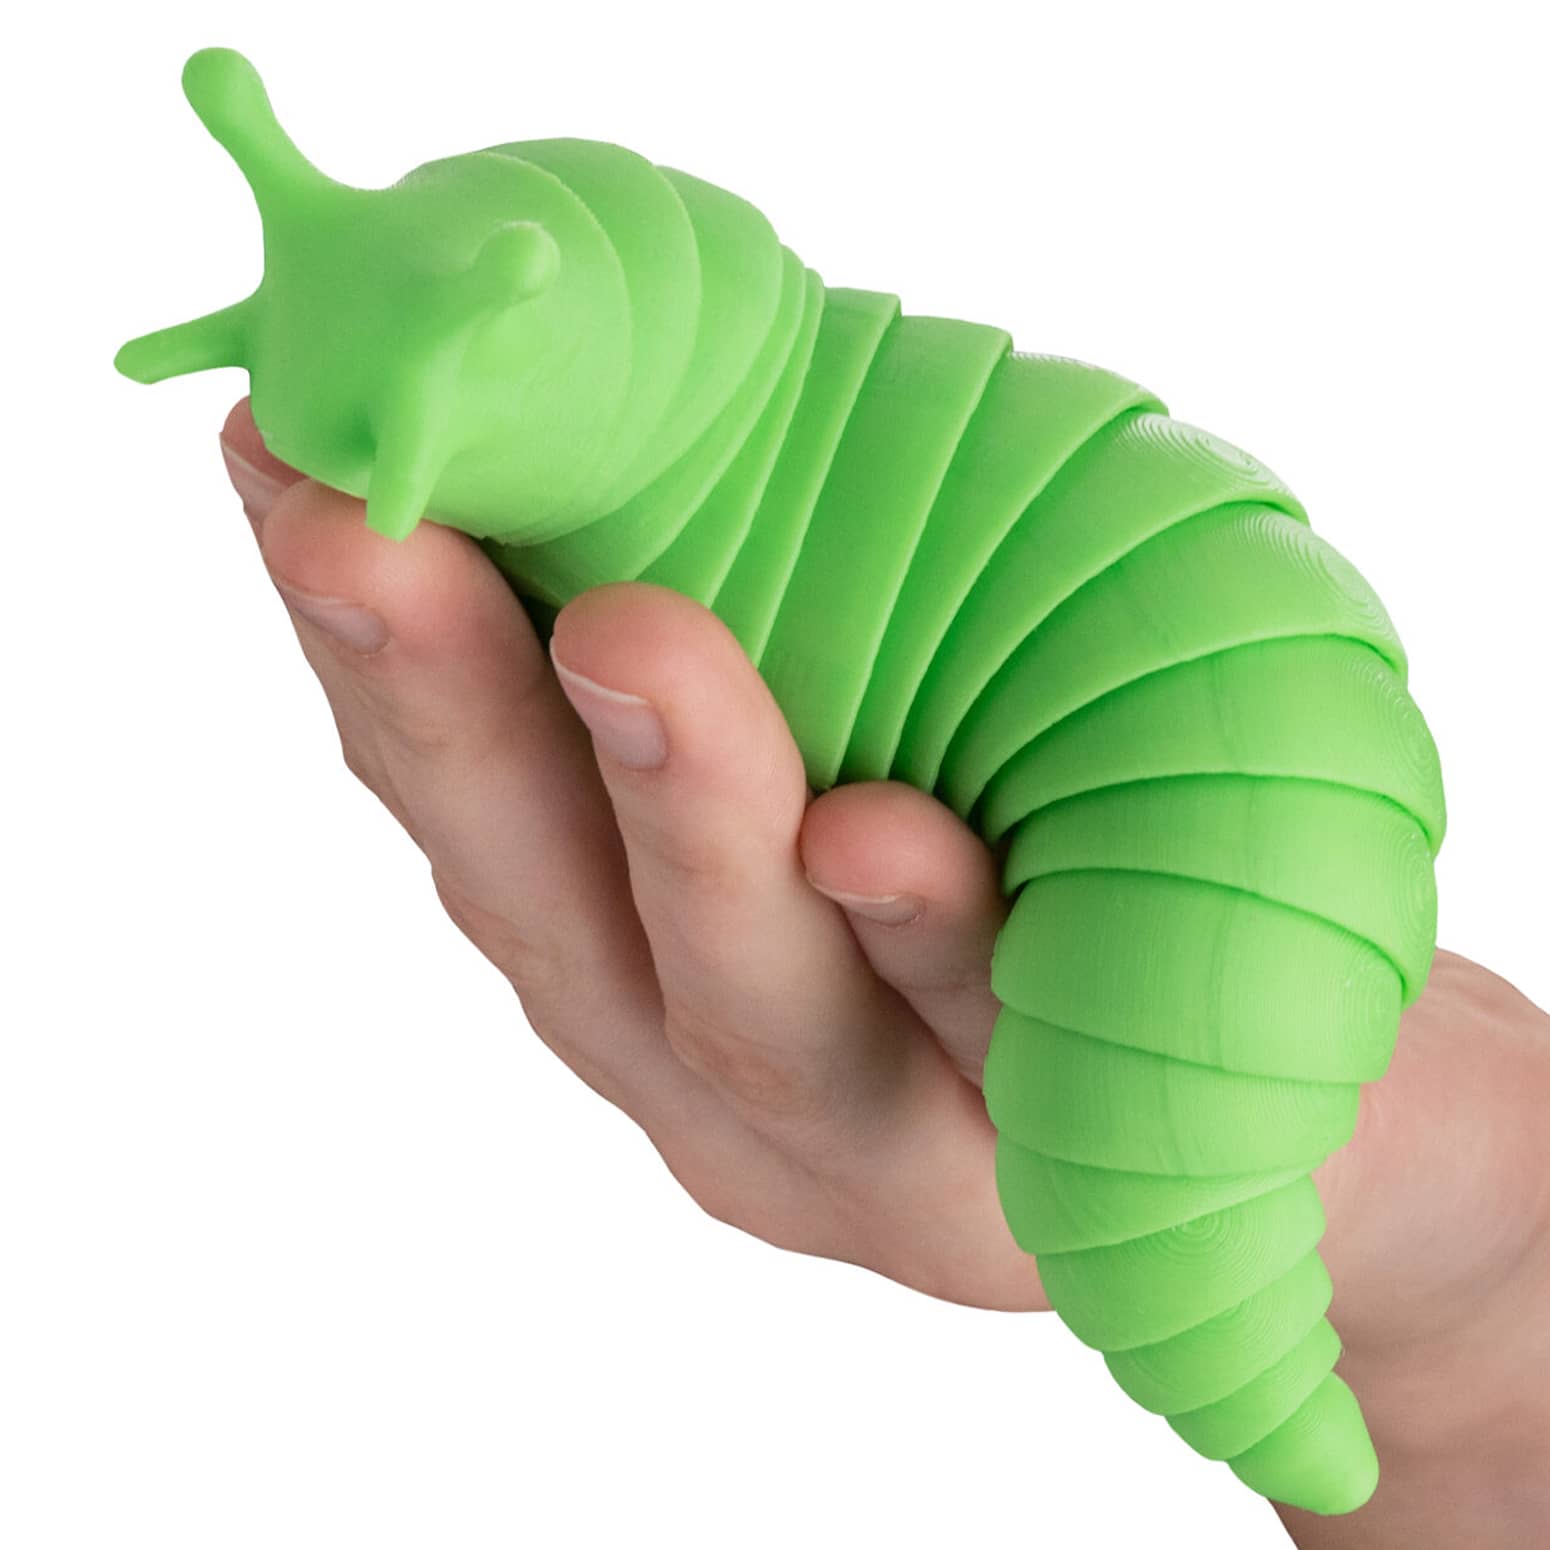 Squirmy Slug - Stress-Relieving Articulating Fidget Toy